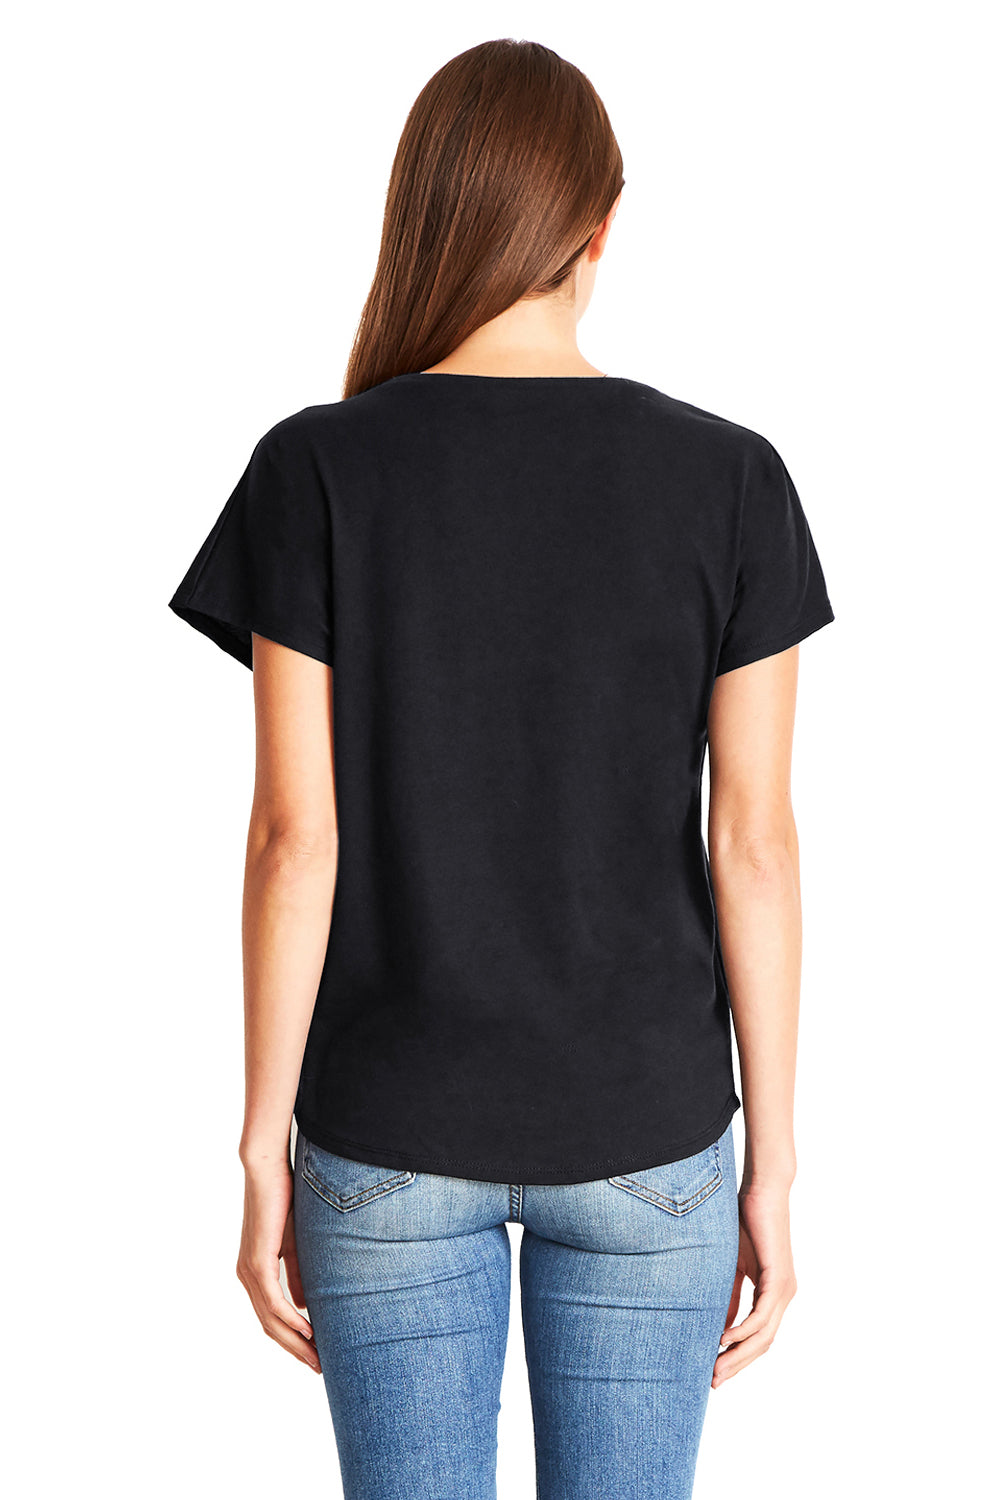 Next Level 1560 Womens Ideal Dolman Short Sleeve Crewneck T-Shirt Black Back